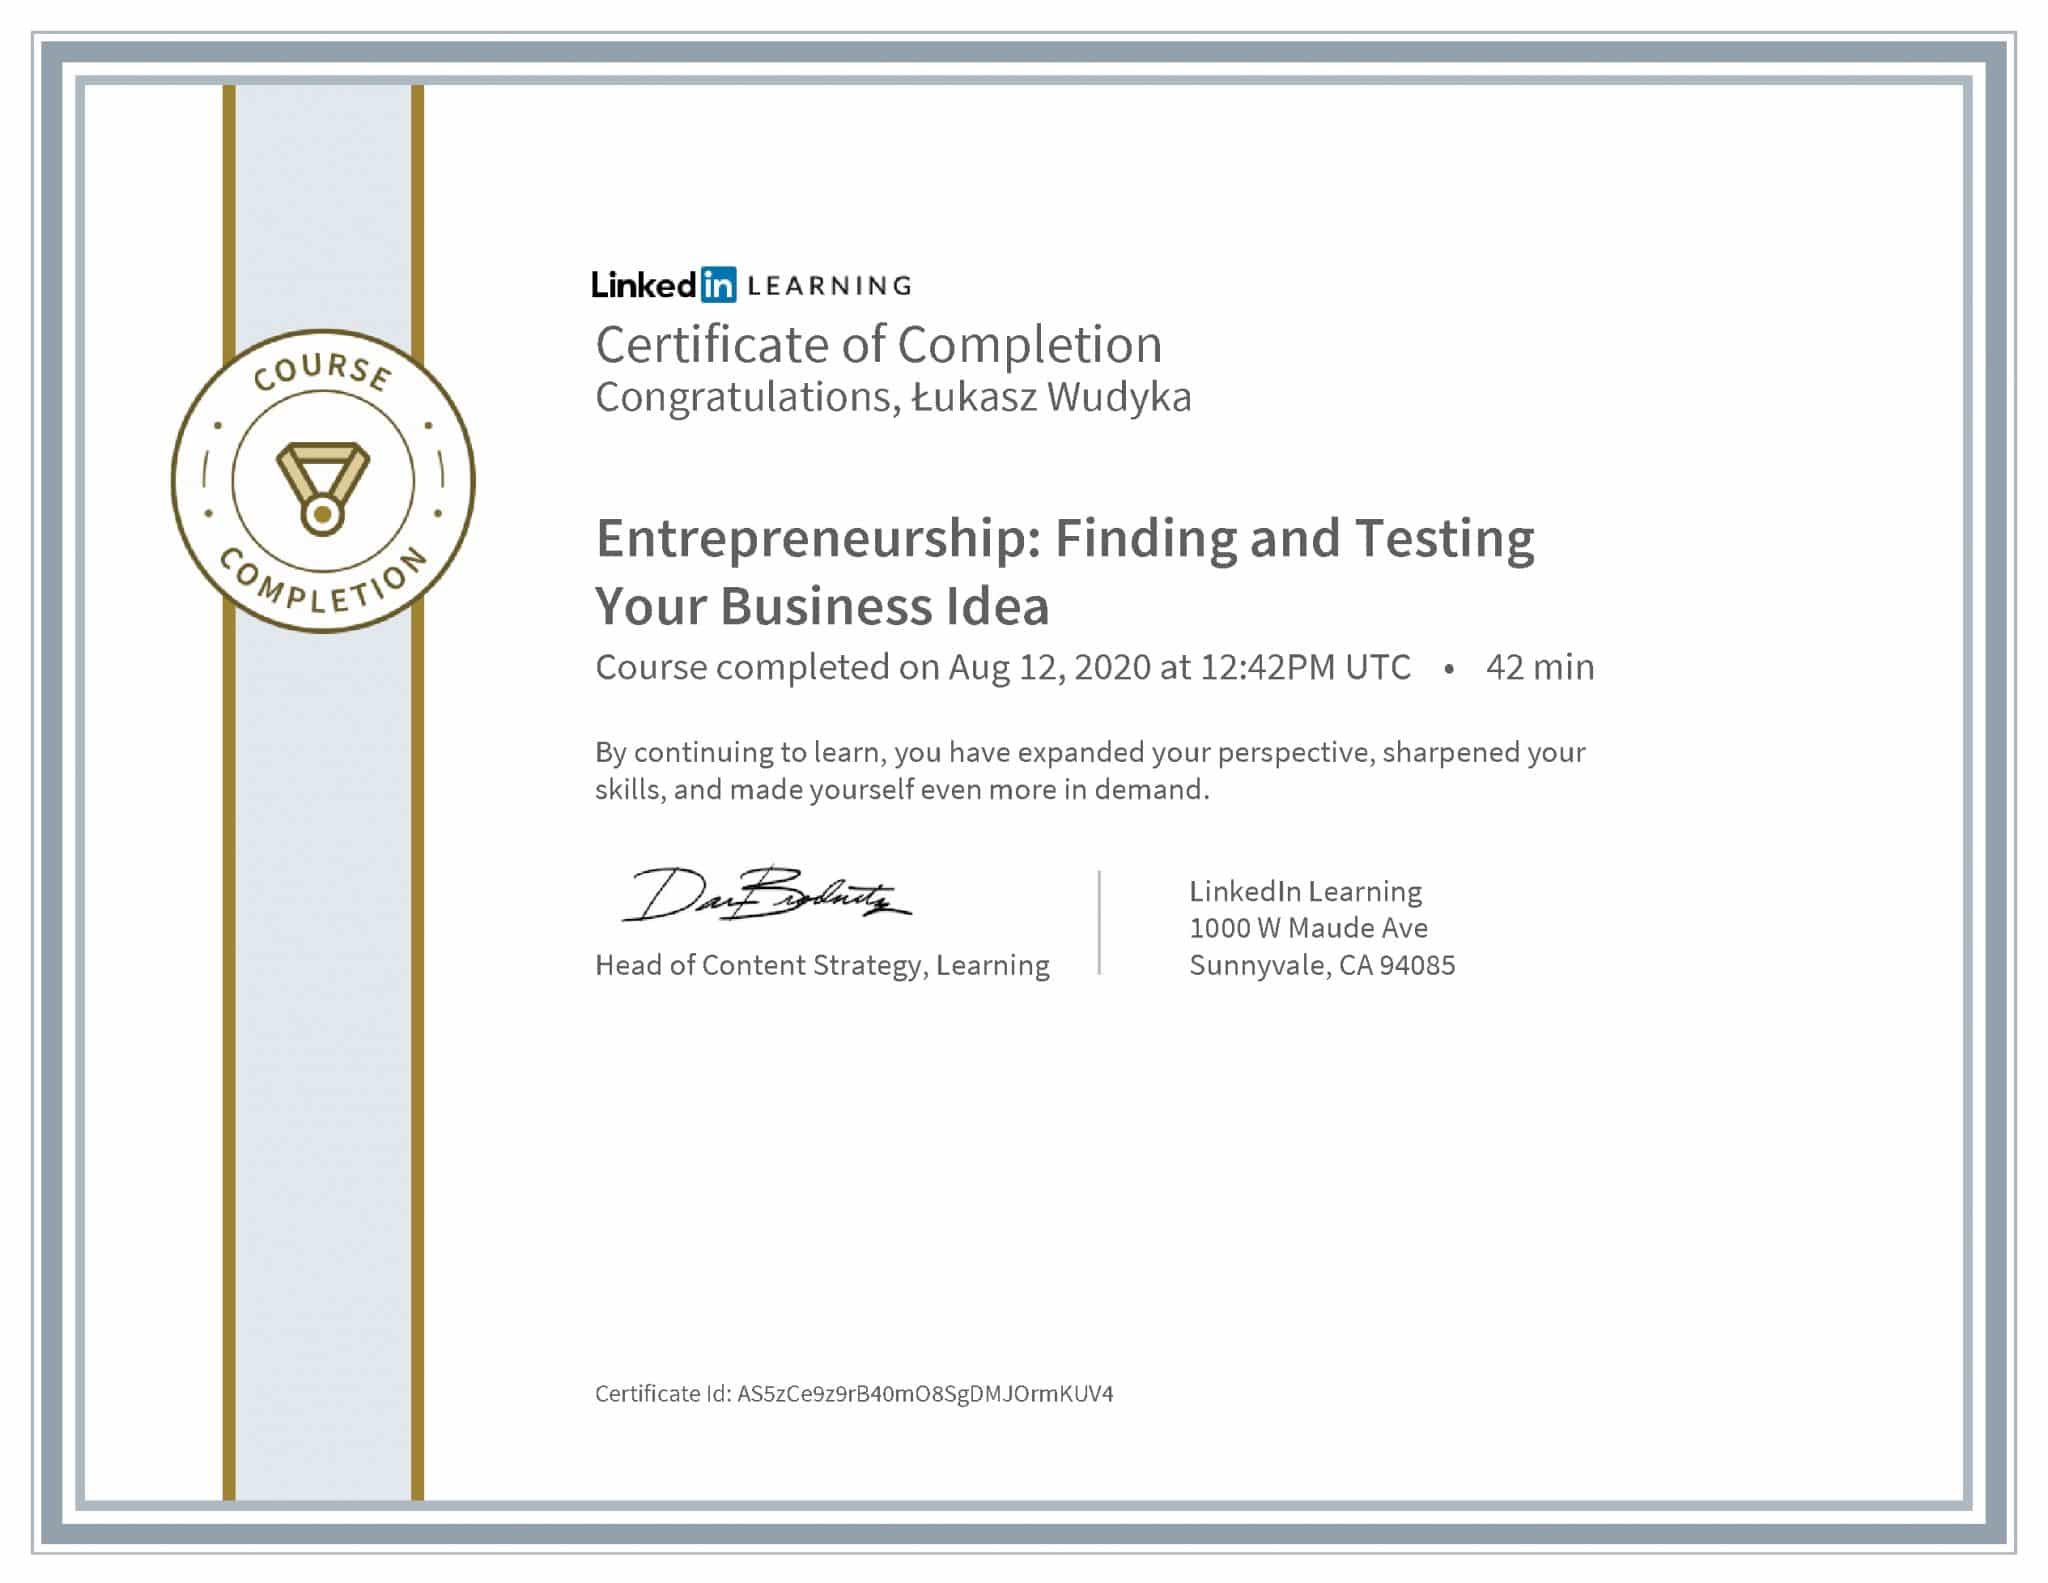 Łukasz Wudyka certyfikat LinkedIn Entrepreneurship: Finding and Testing Your Business Idea